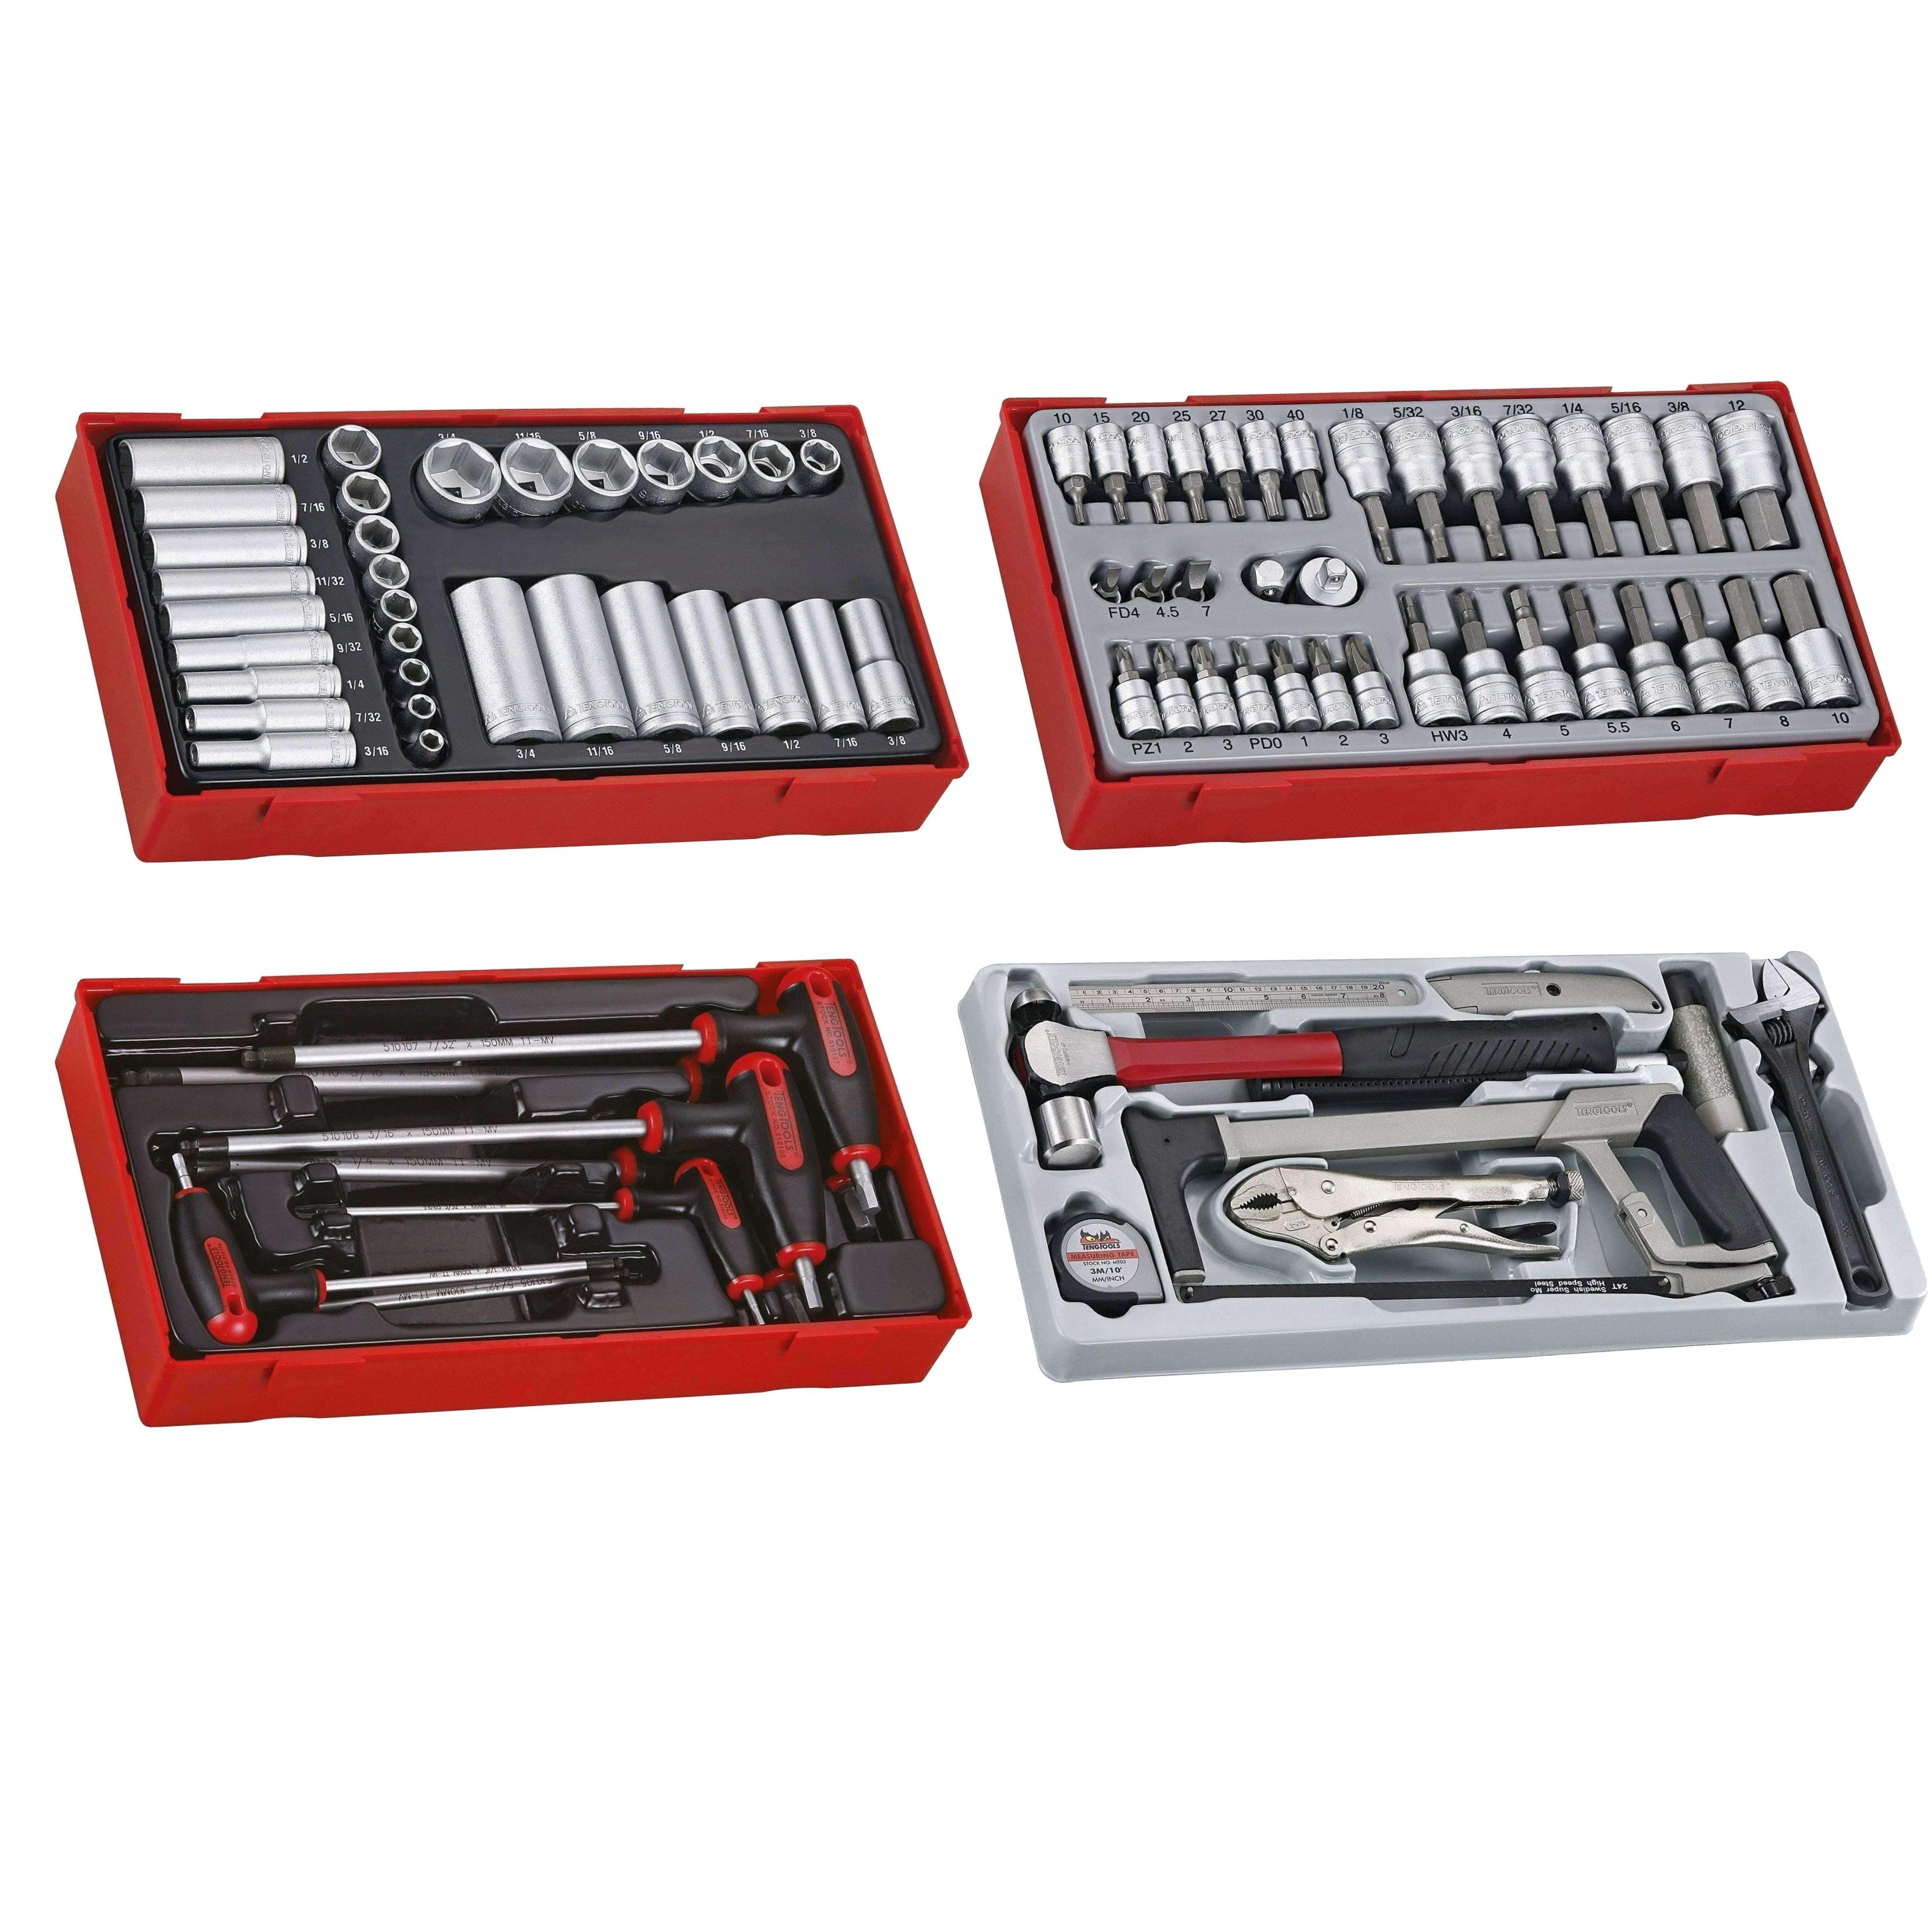 Teng Tools 231 Piece Complete Mixed General Hand Tool Kit (Mega Bundle 1) - TCW707EV-KIT2